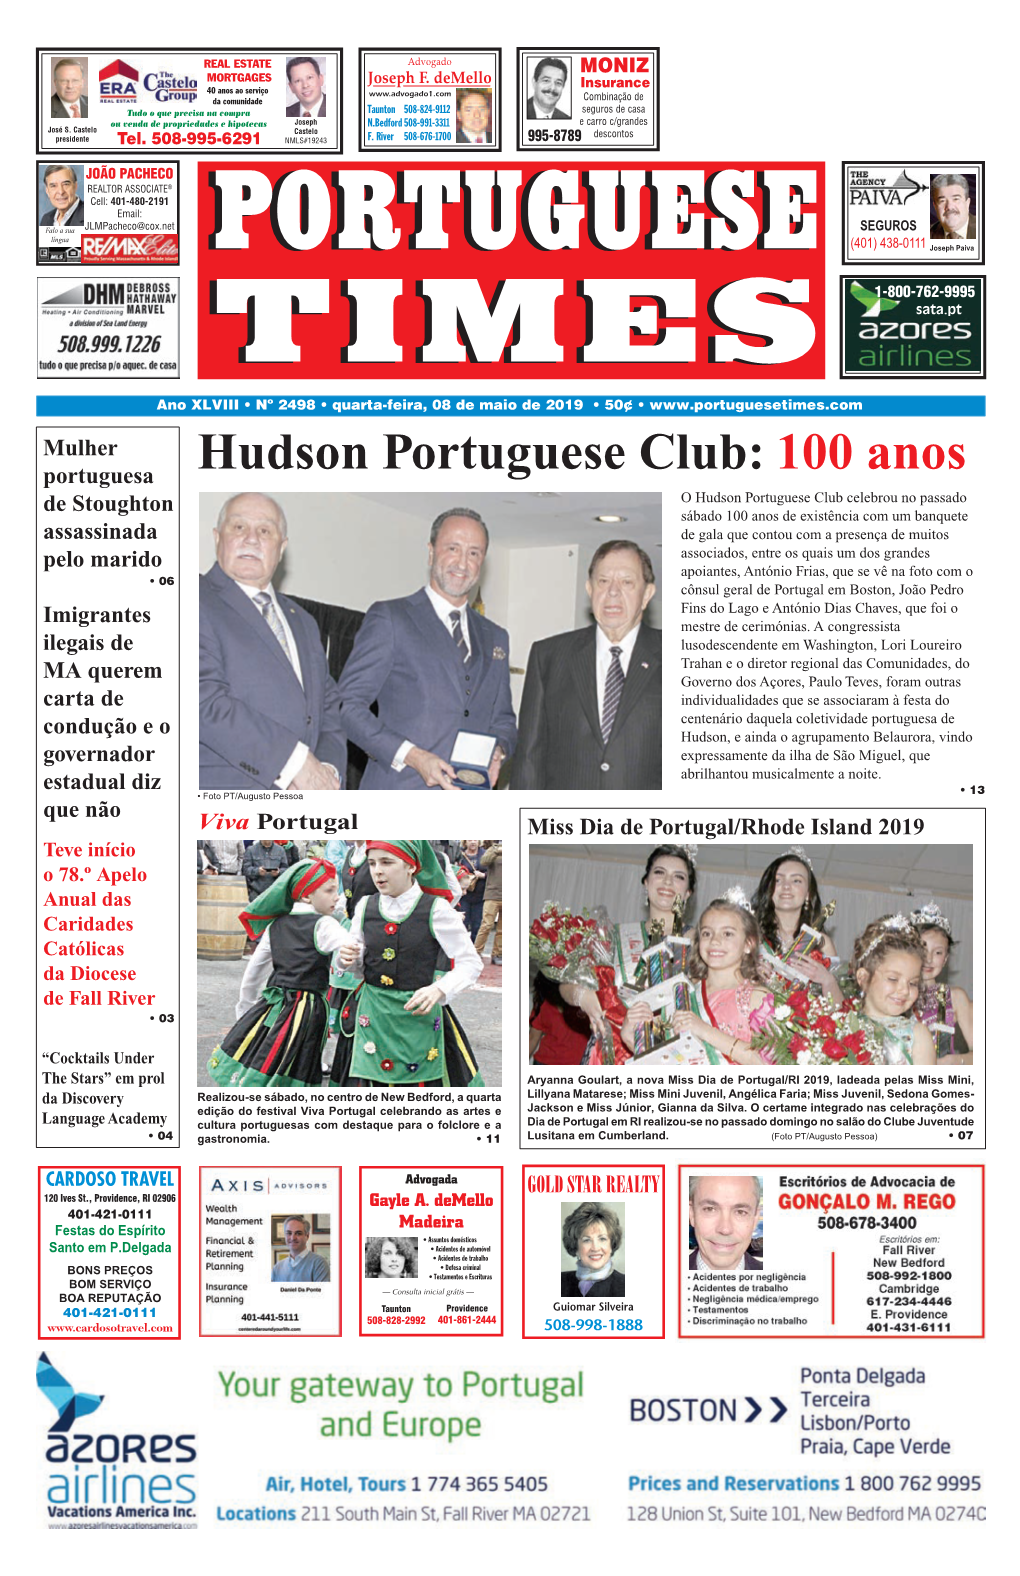 Hudson Portuguese Club